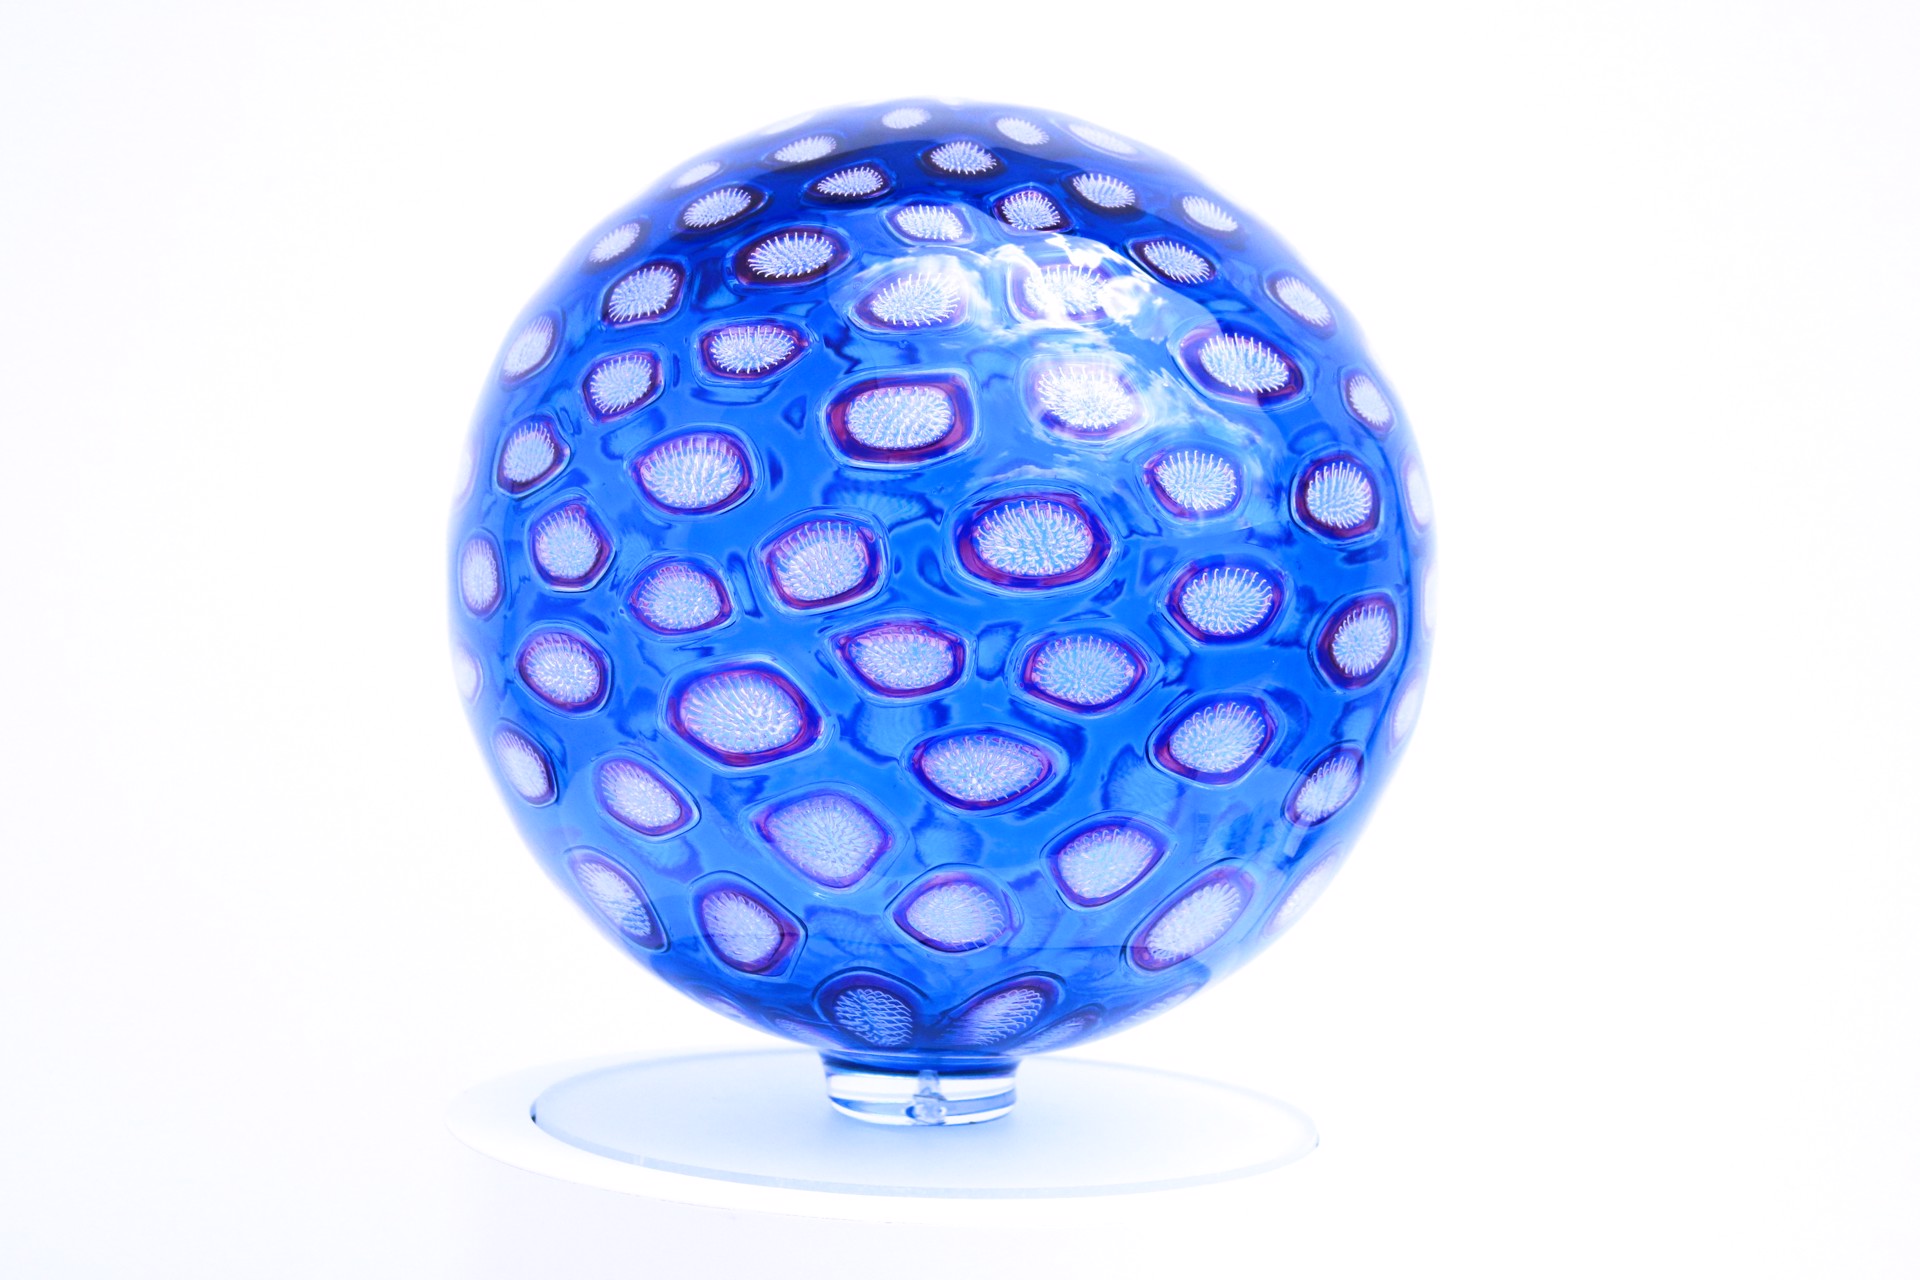 "Cerulean Sphere by David Patchen